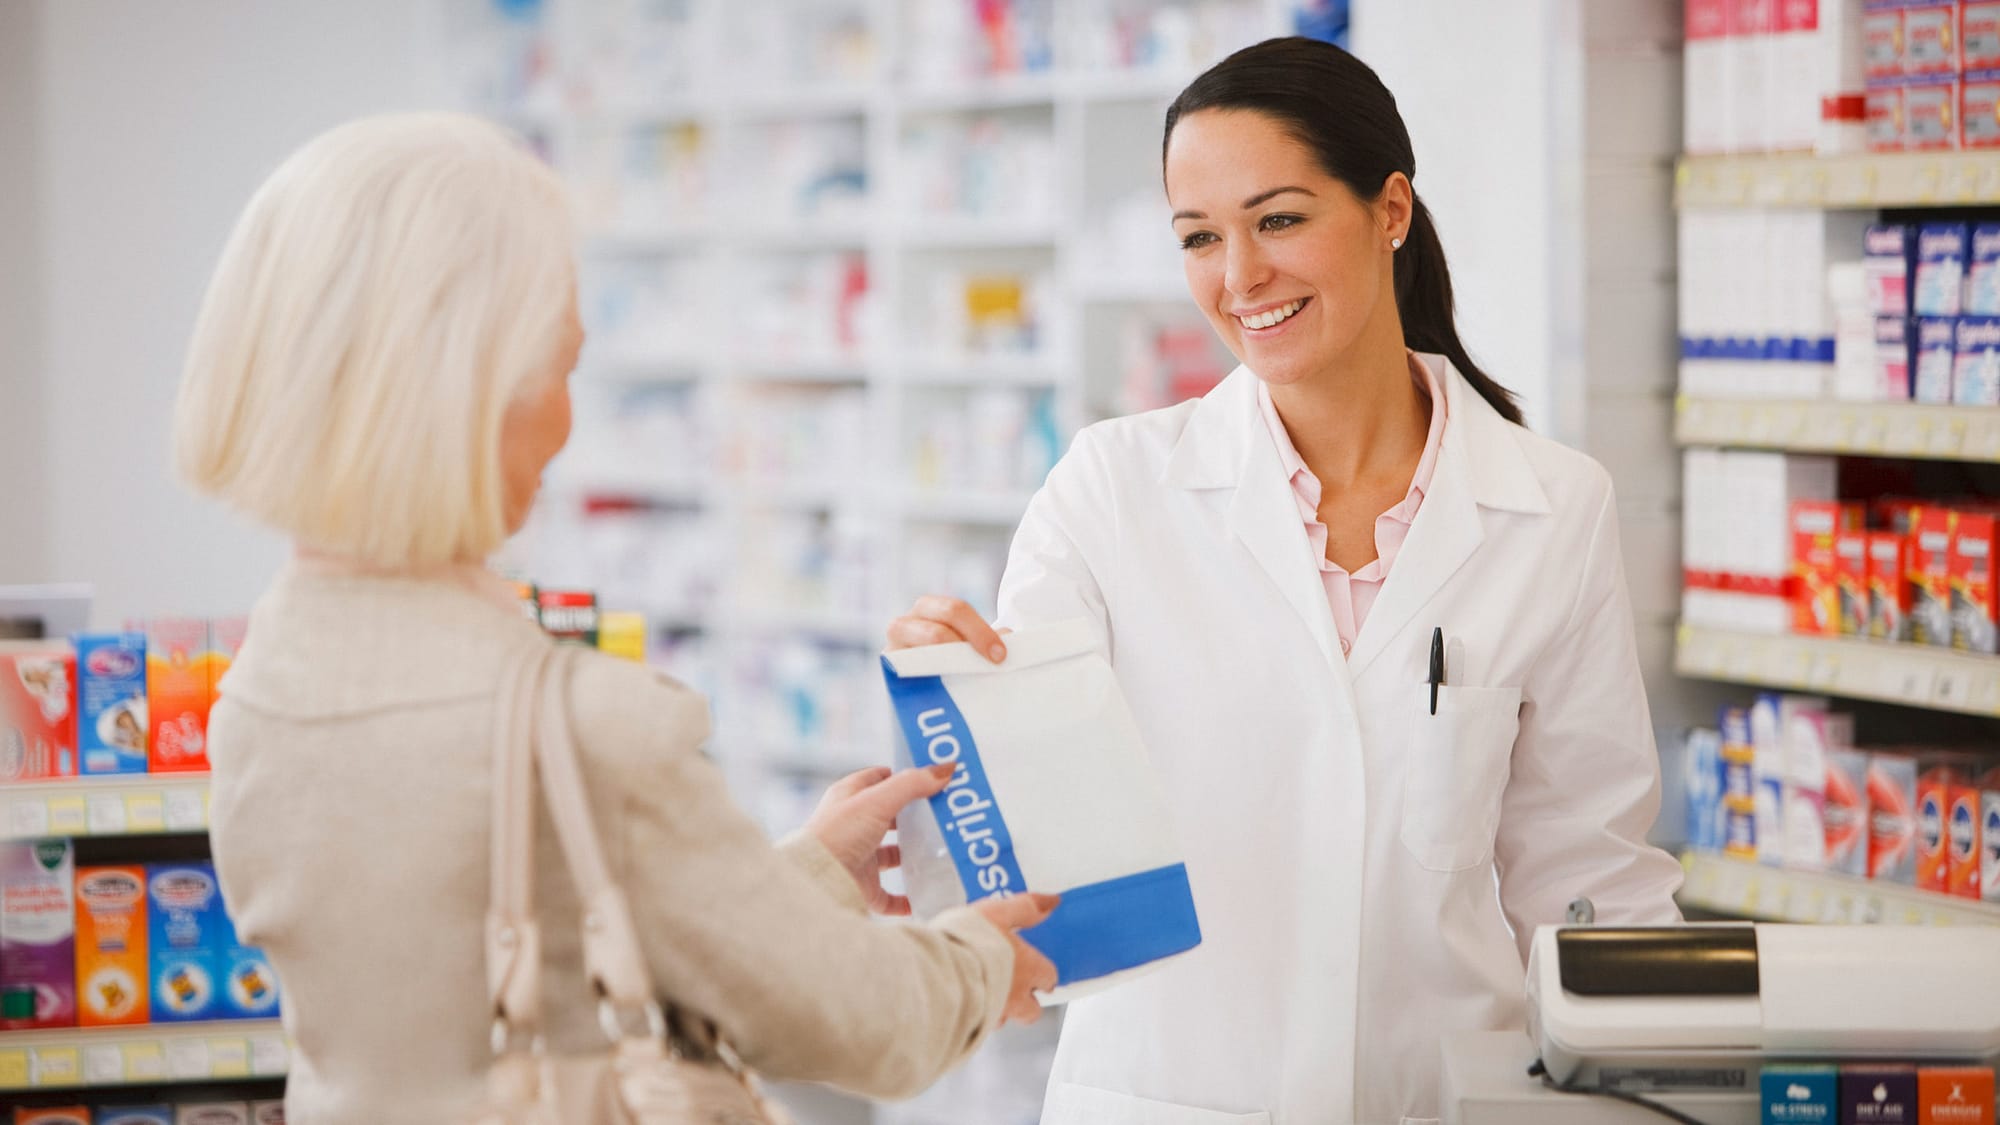 Pharmacist handing customer a prescription in a drug store.